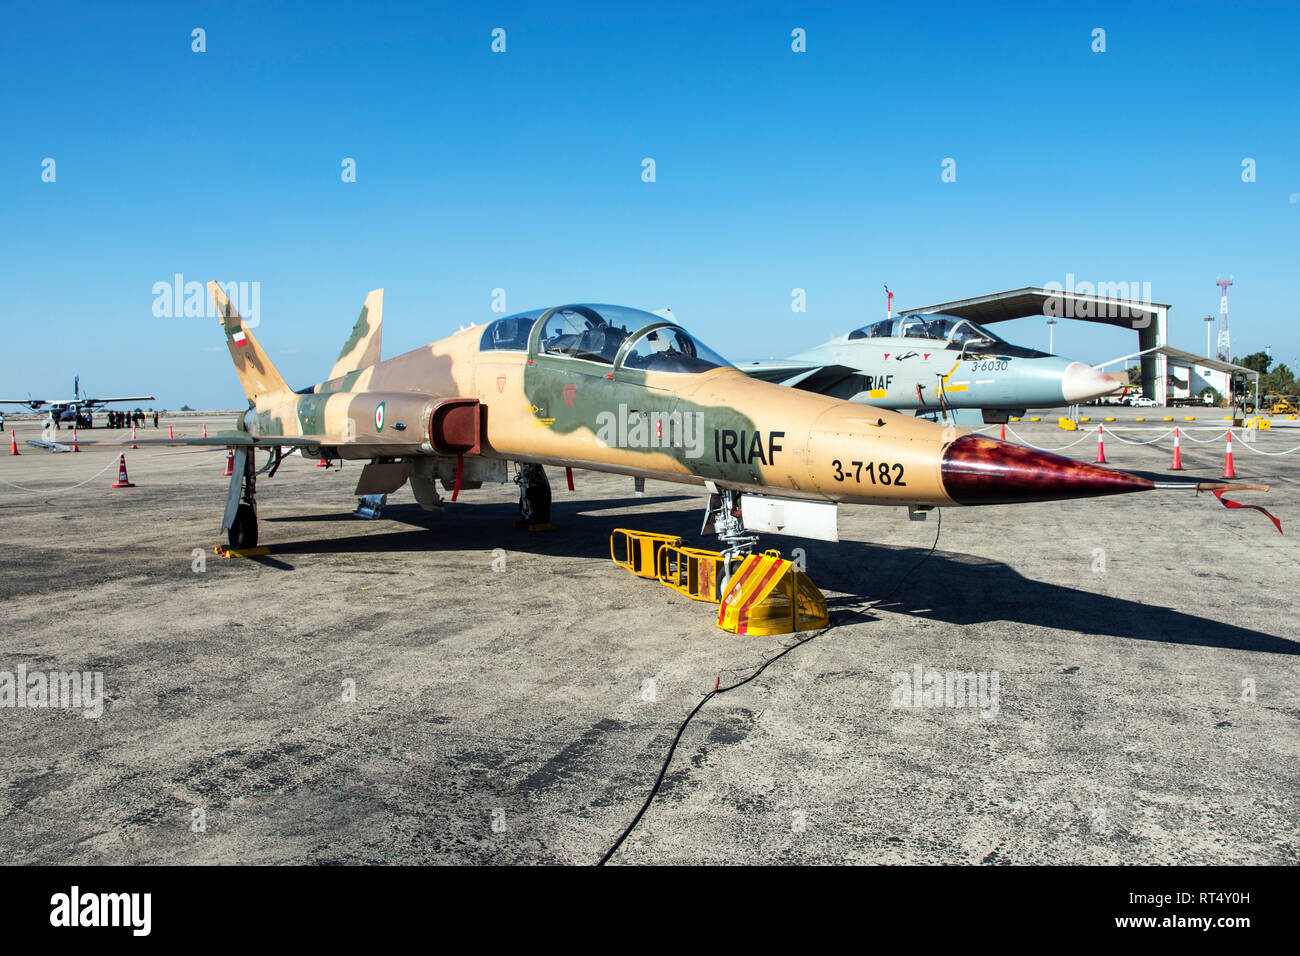 The HESA Saegheh II advanced training aircraft of the Islamic Republic of Iran Air Force. Stock Photo